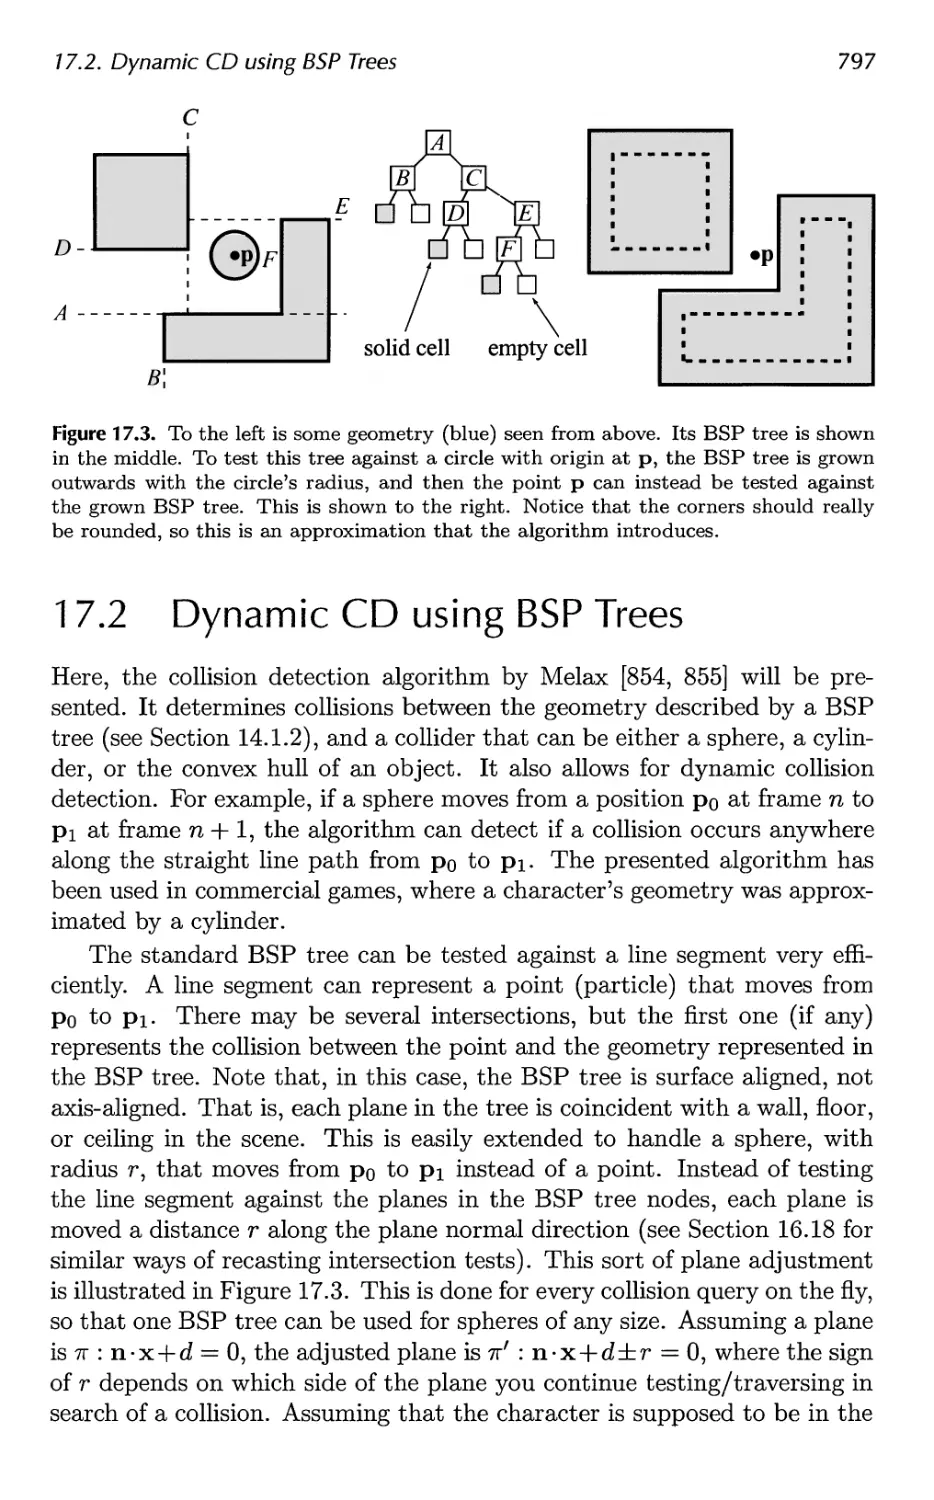 17.2 Dynamic CD using BSP Trees